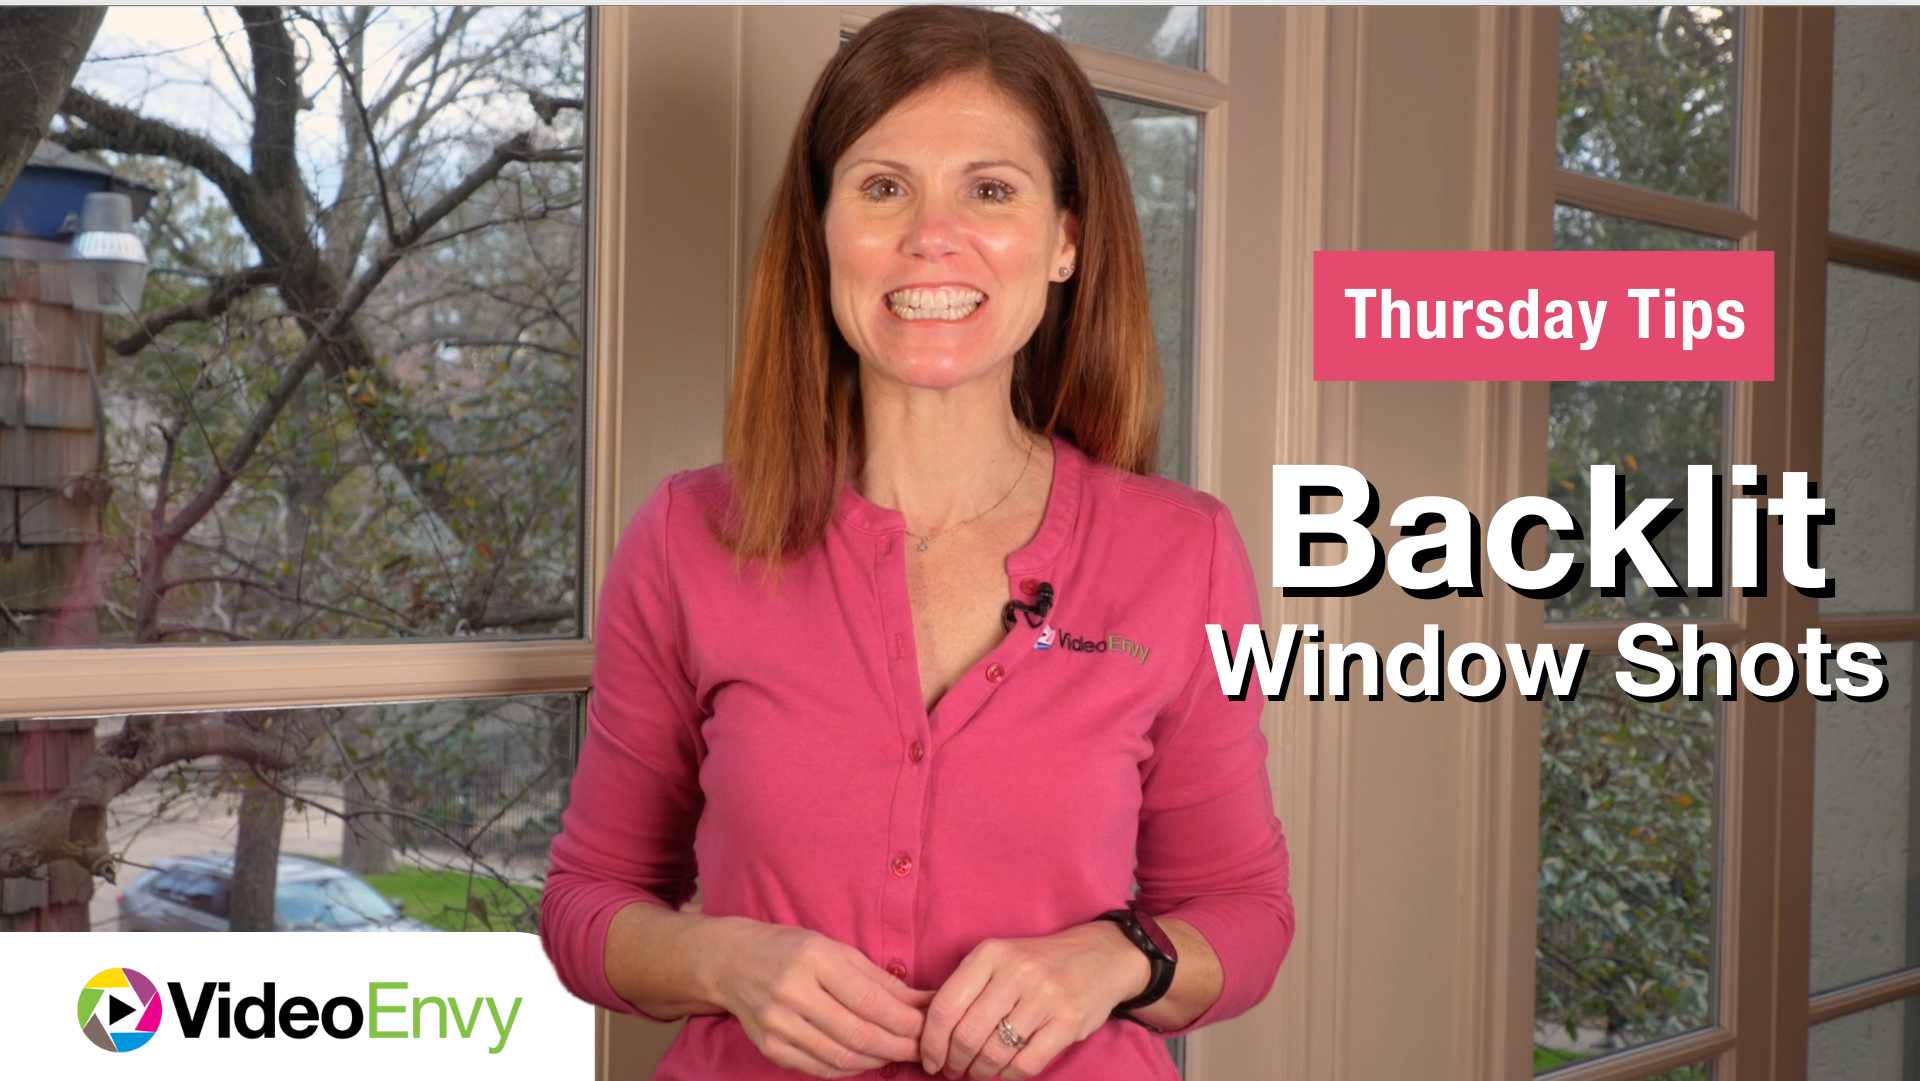 Thursday Tips: Backlit Window Shots